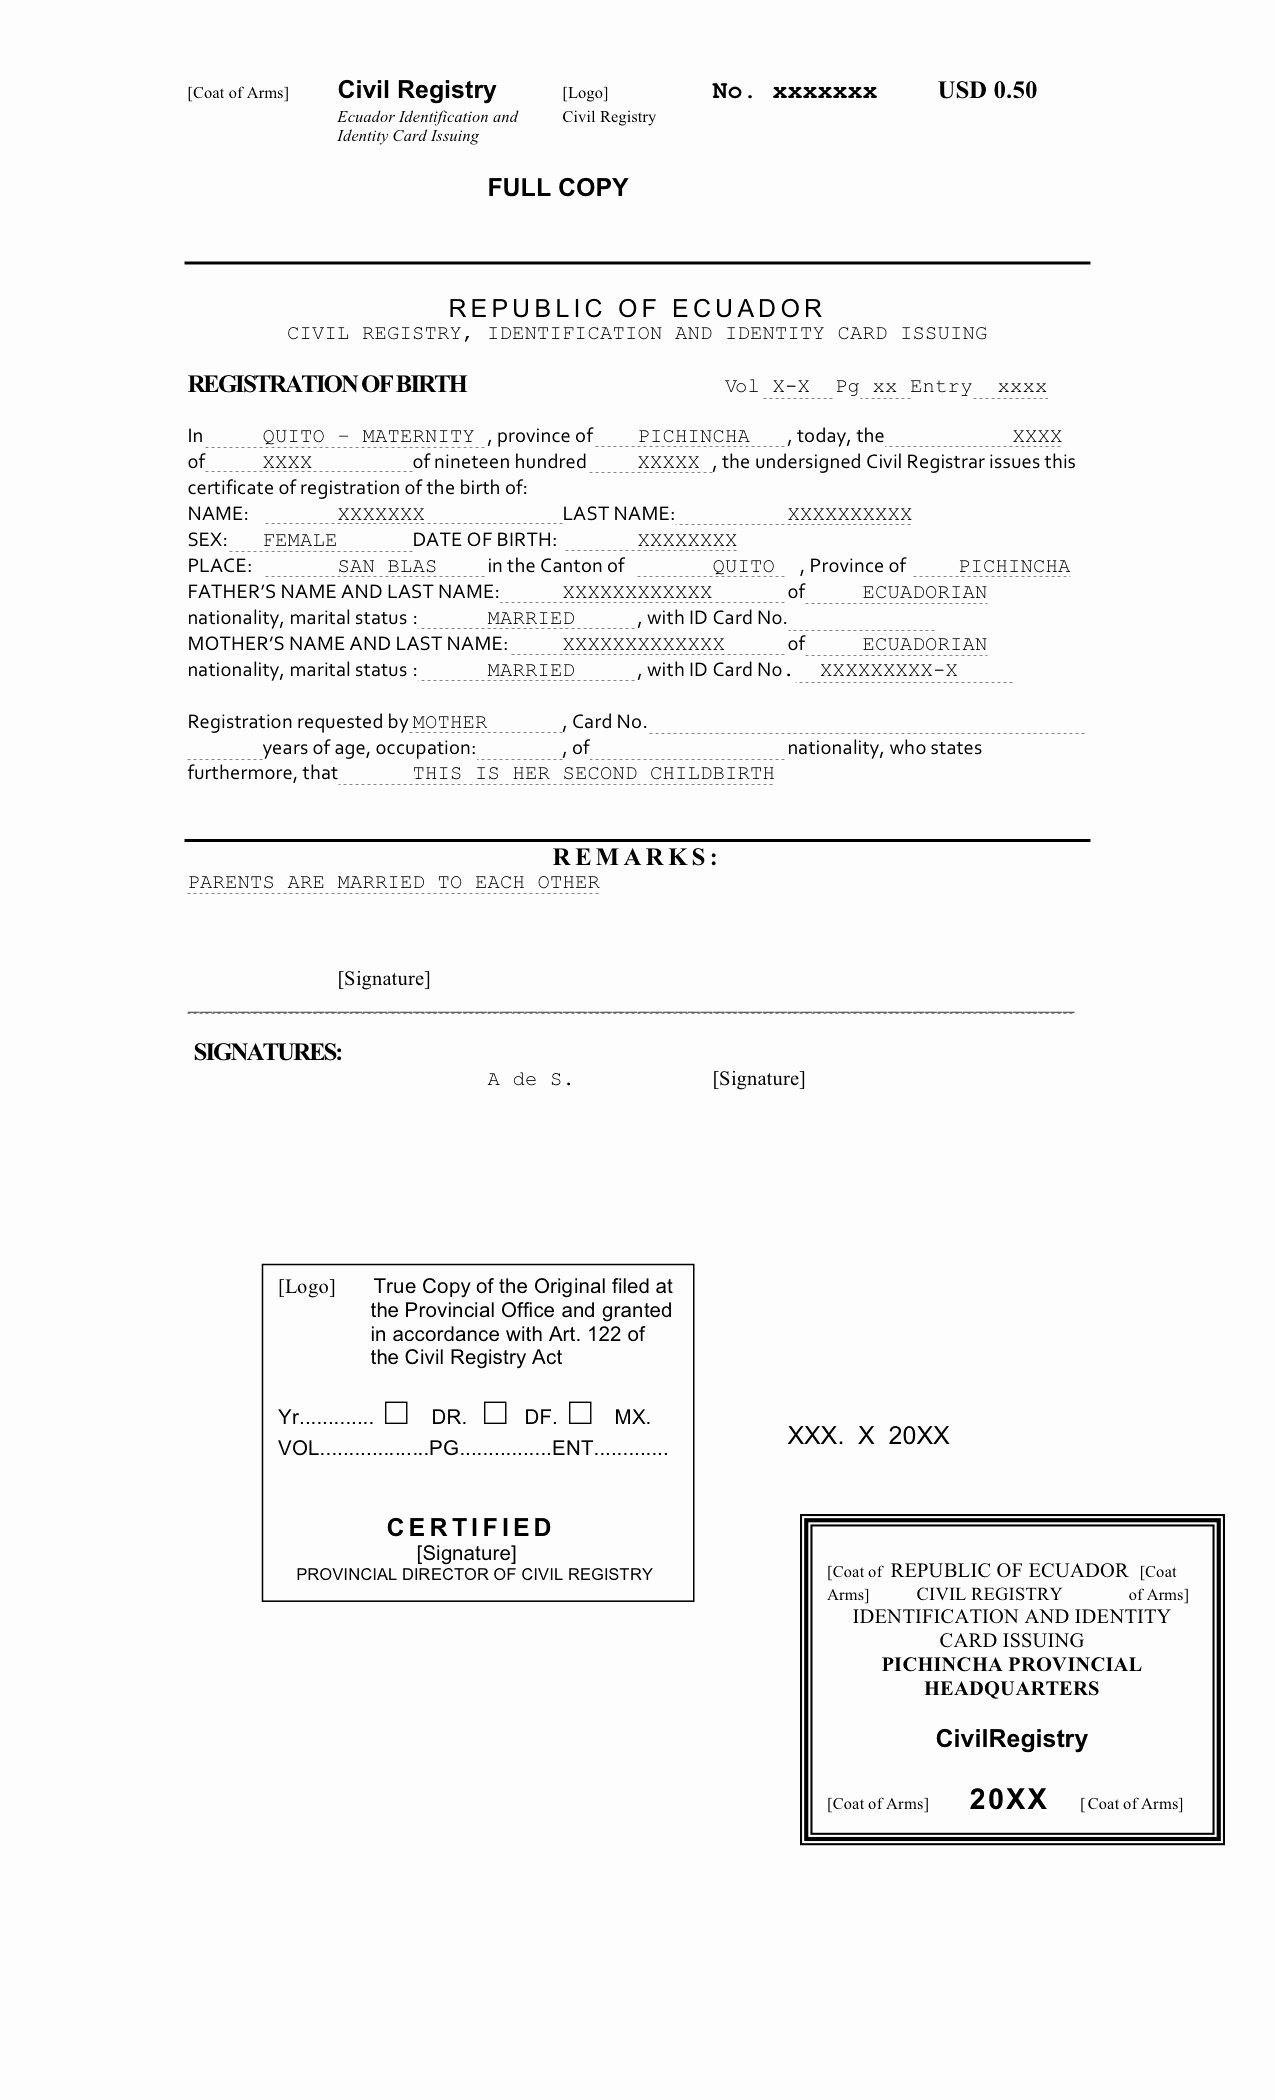 Marriage Certificate Translation Template Spanish to English Luxury Katherine Wootton Joyce Spanish German Translator Cayman